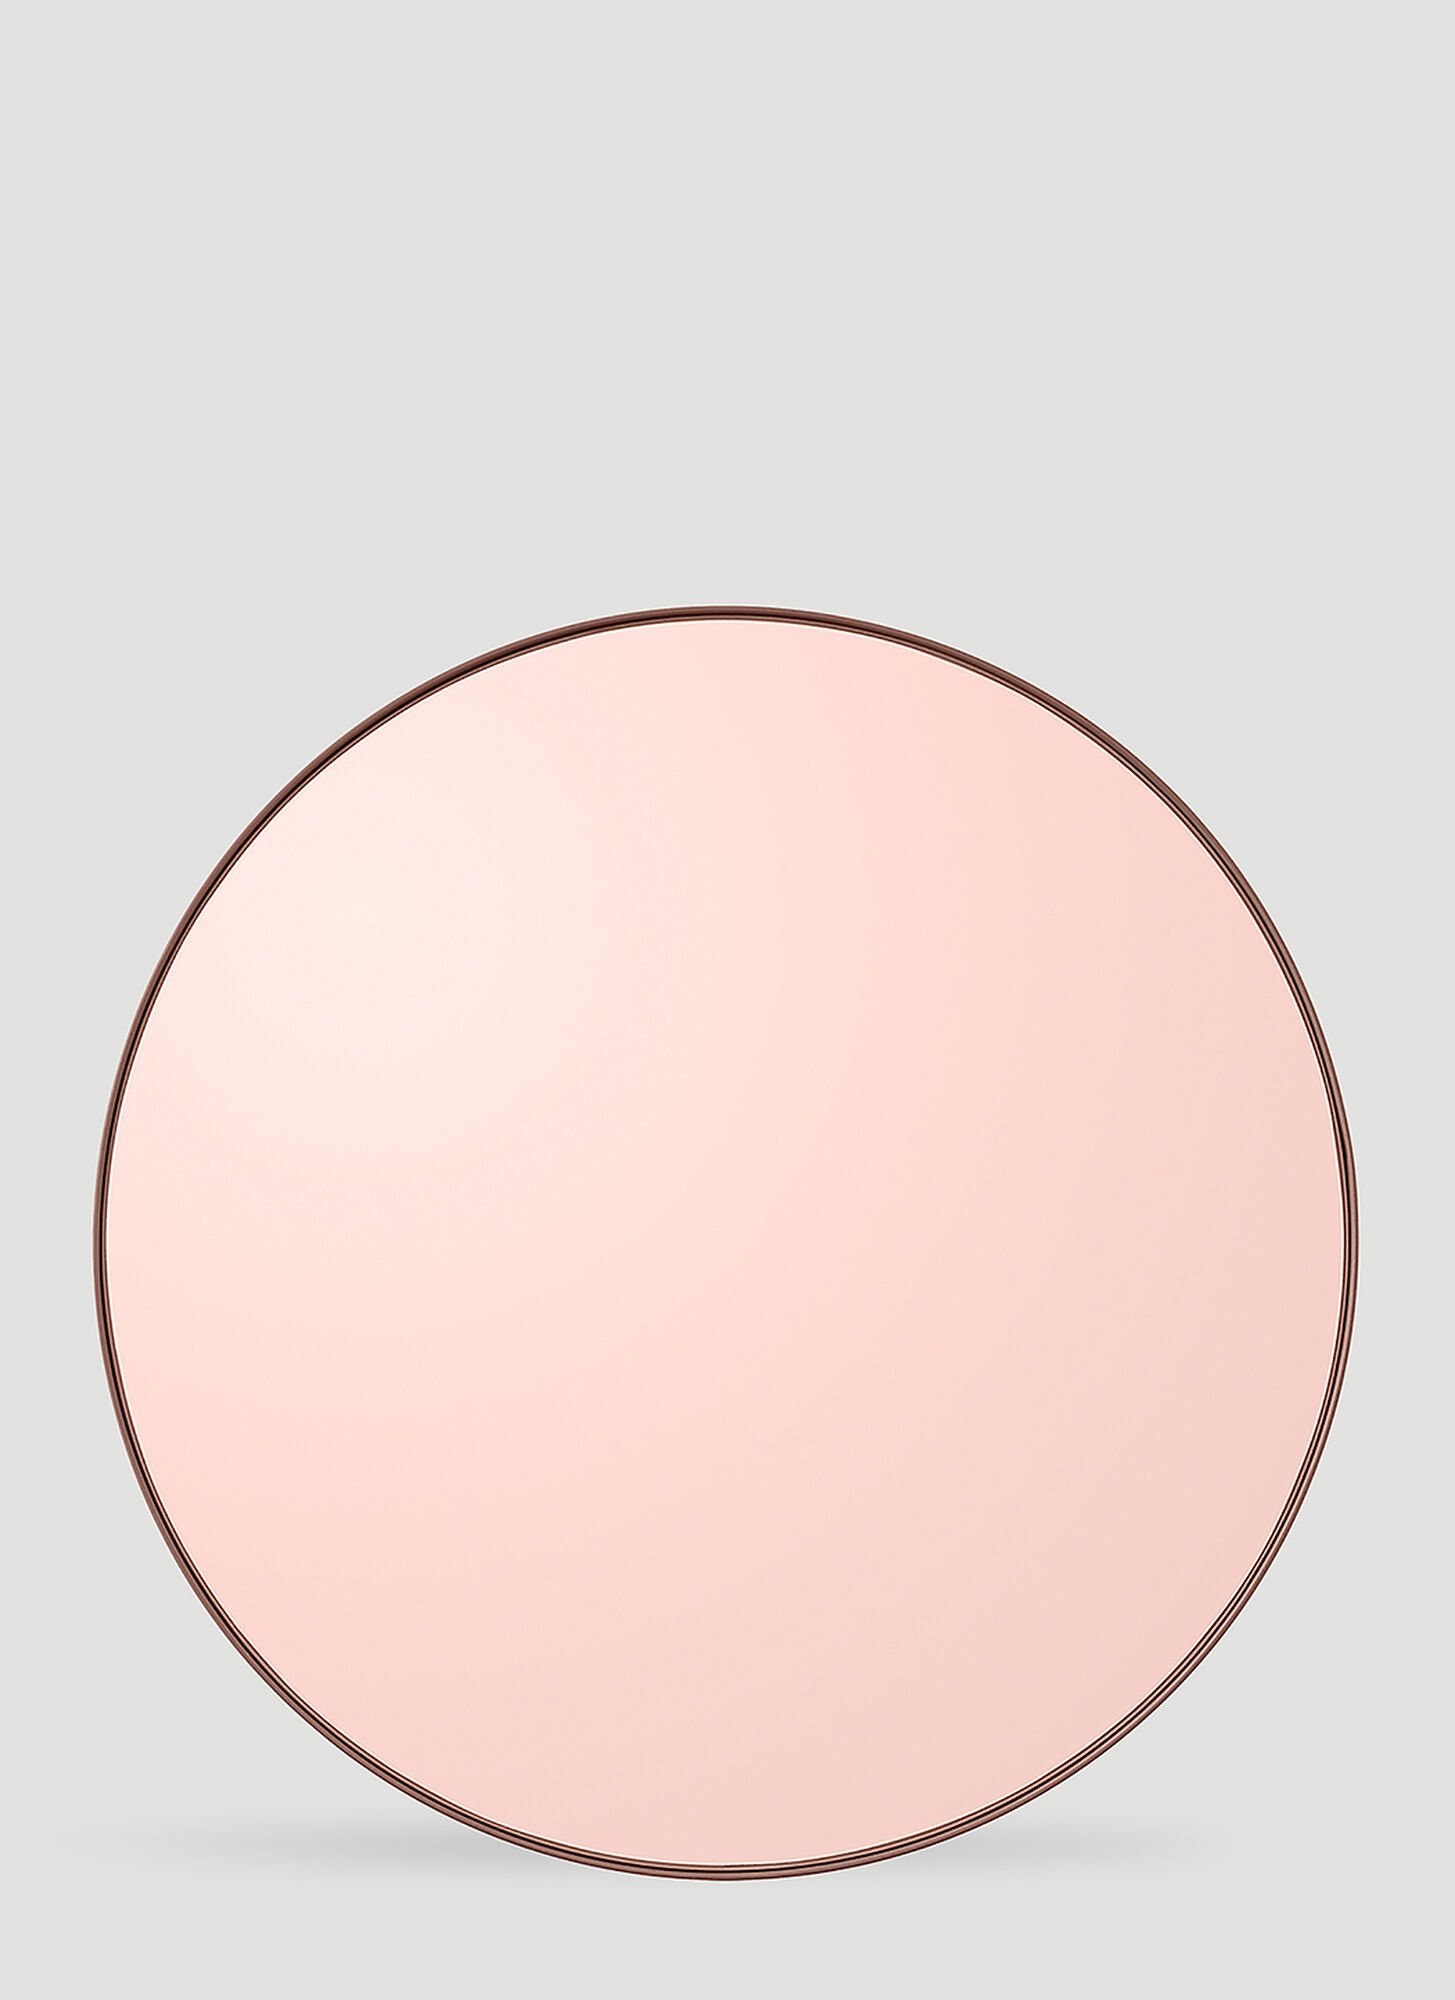 Aytm Circum Mirror In Pink